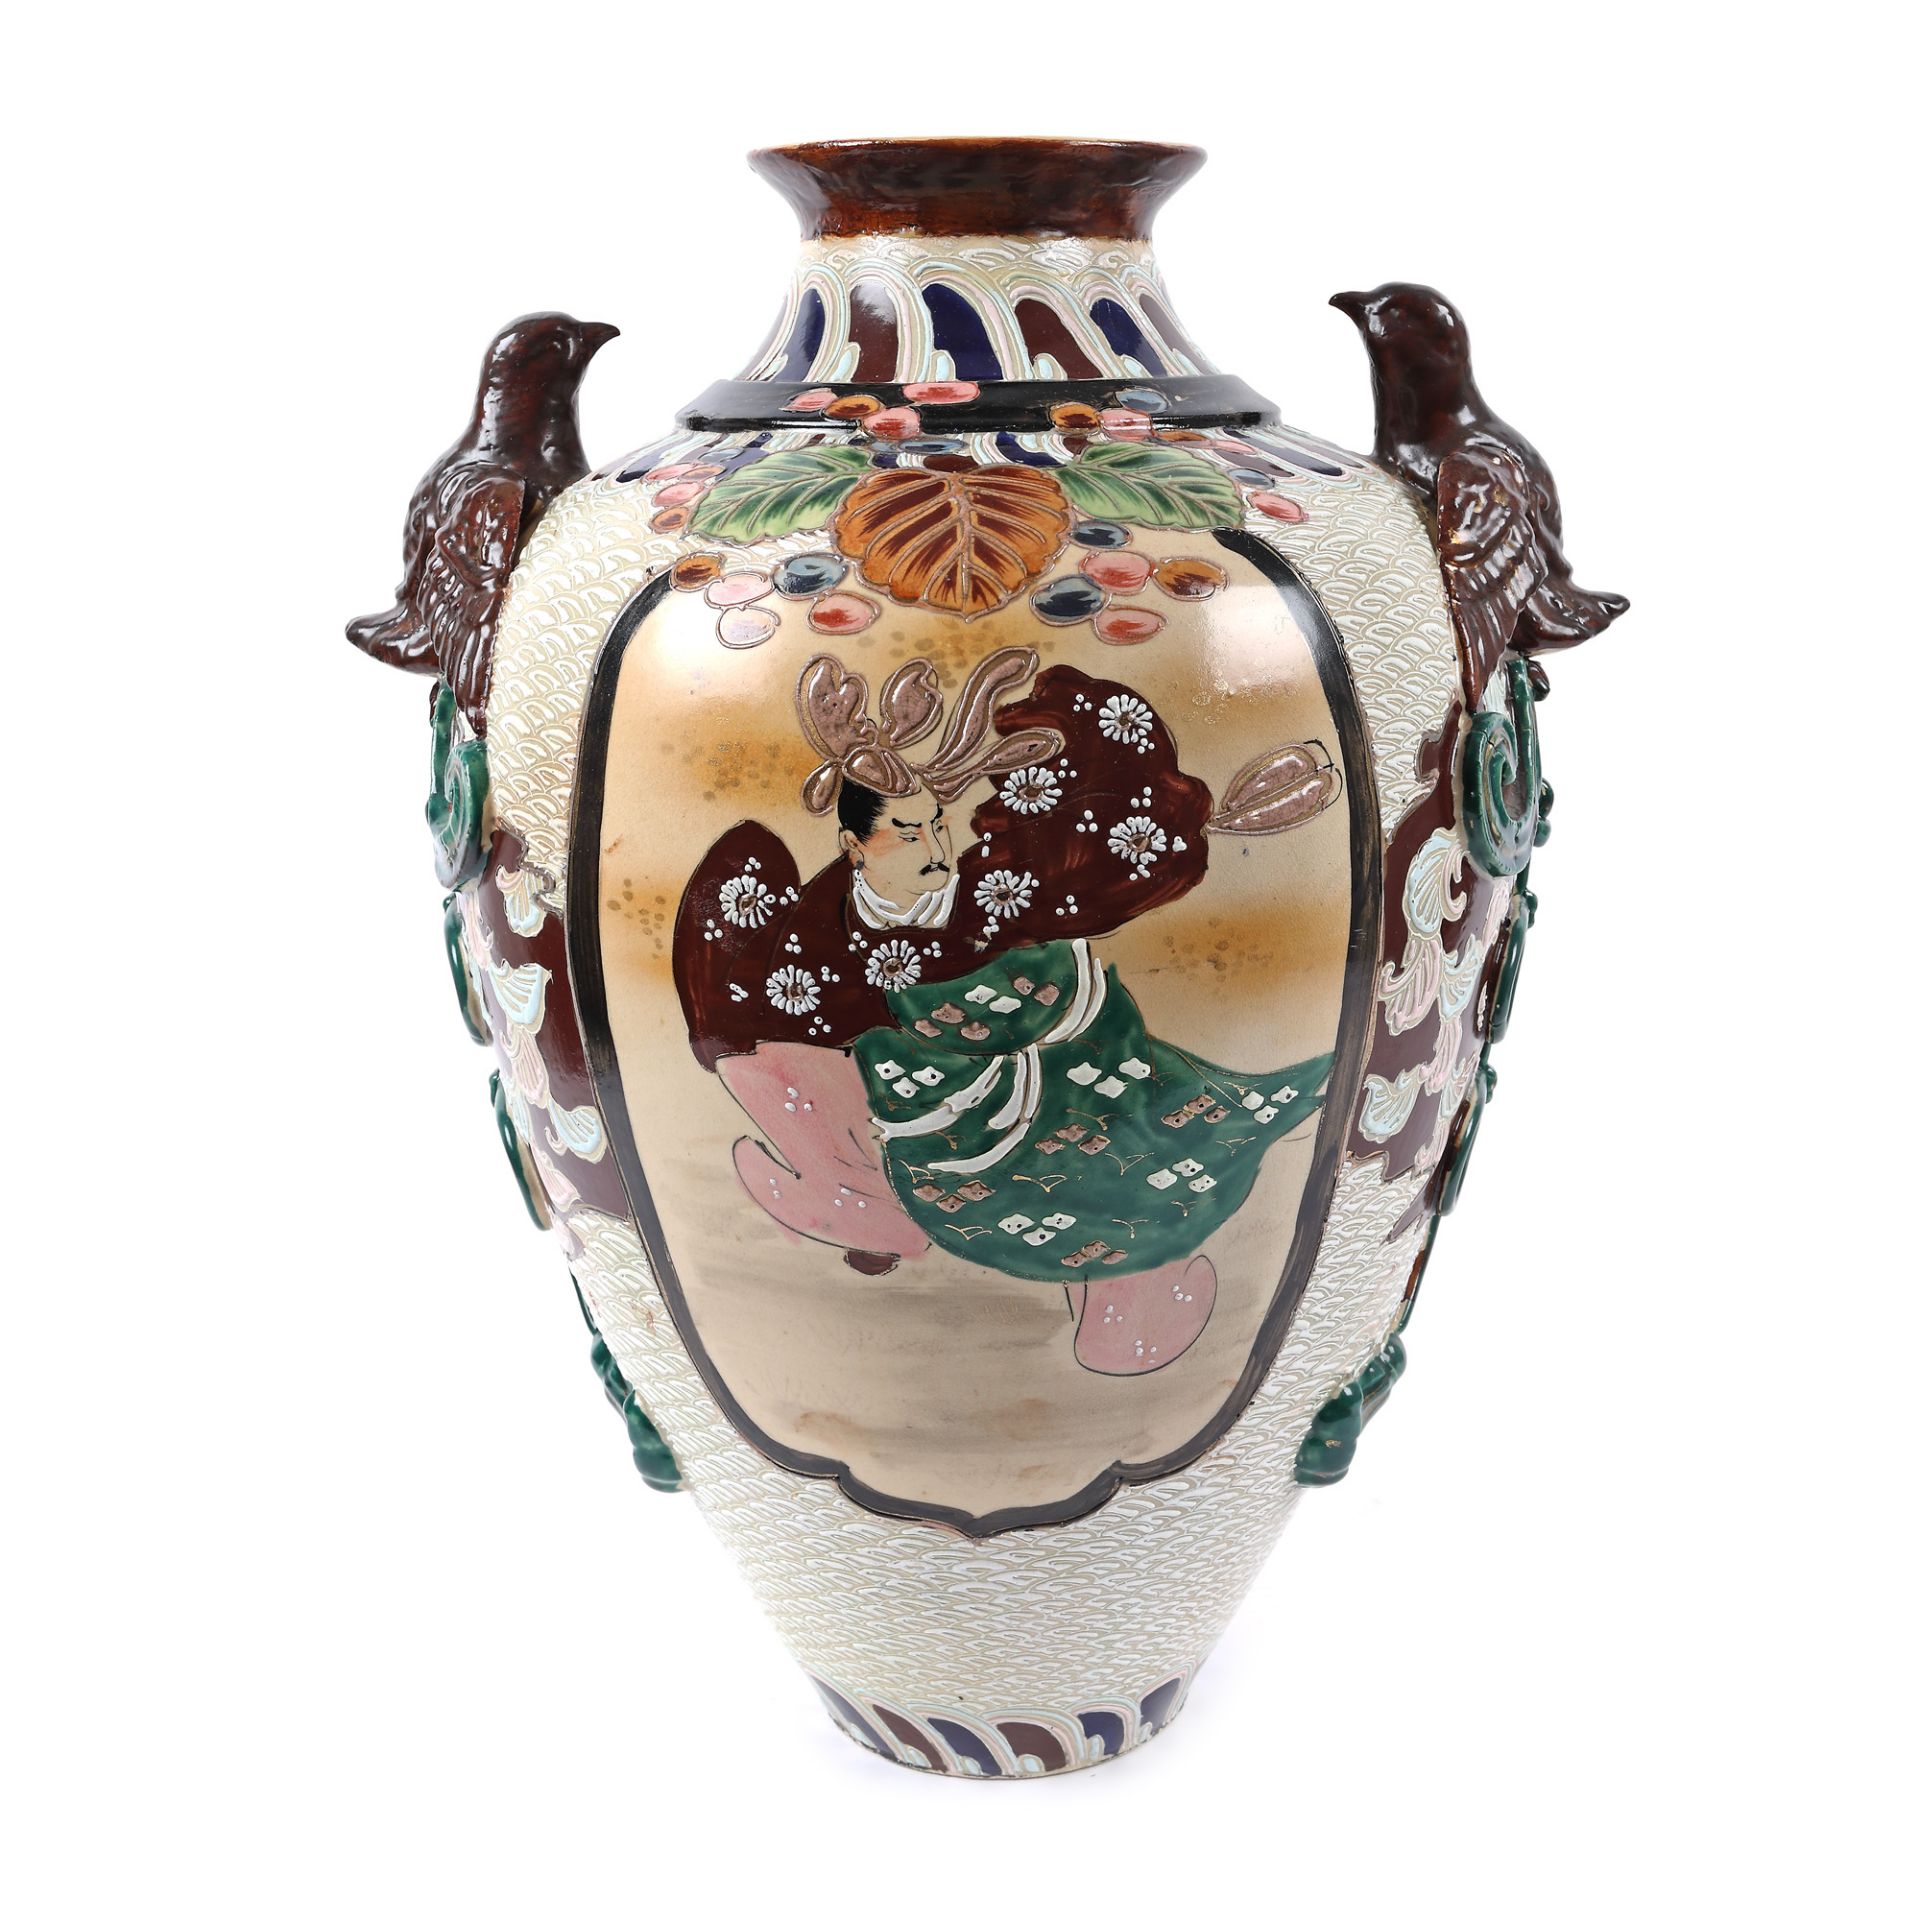 Satsuma vessel made of painted ceramics, decorated with samurai and nightingales, Japan - Image 3 of 4